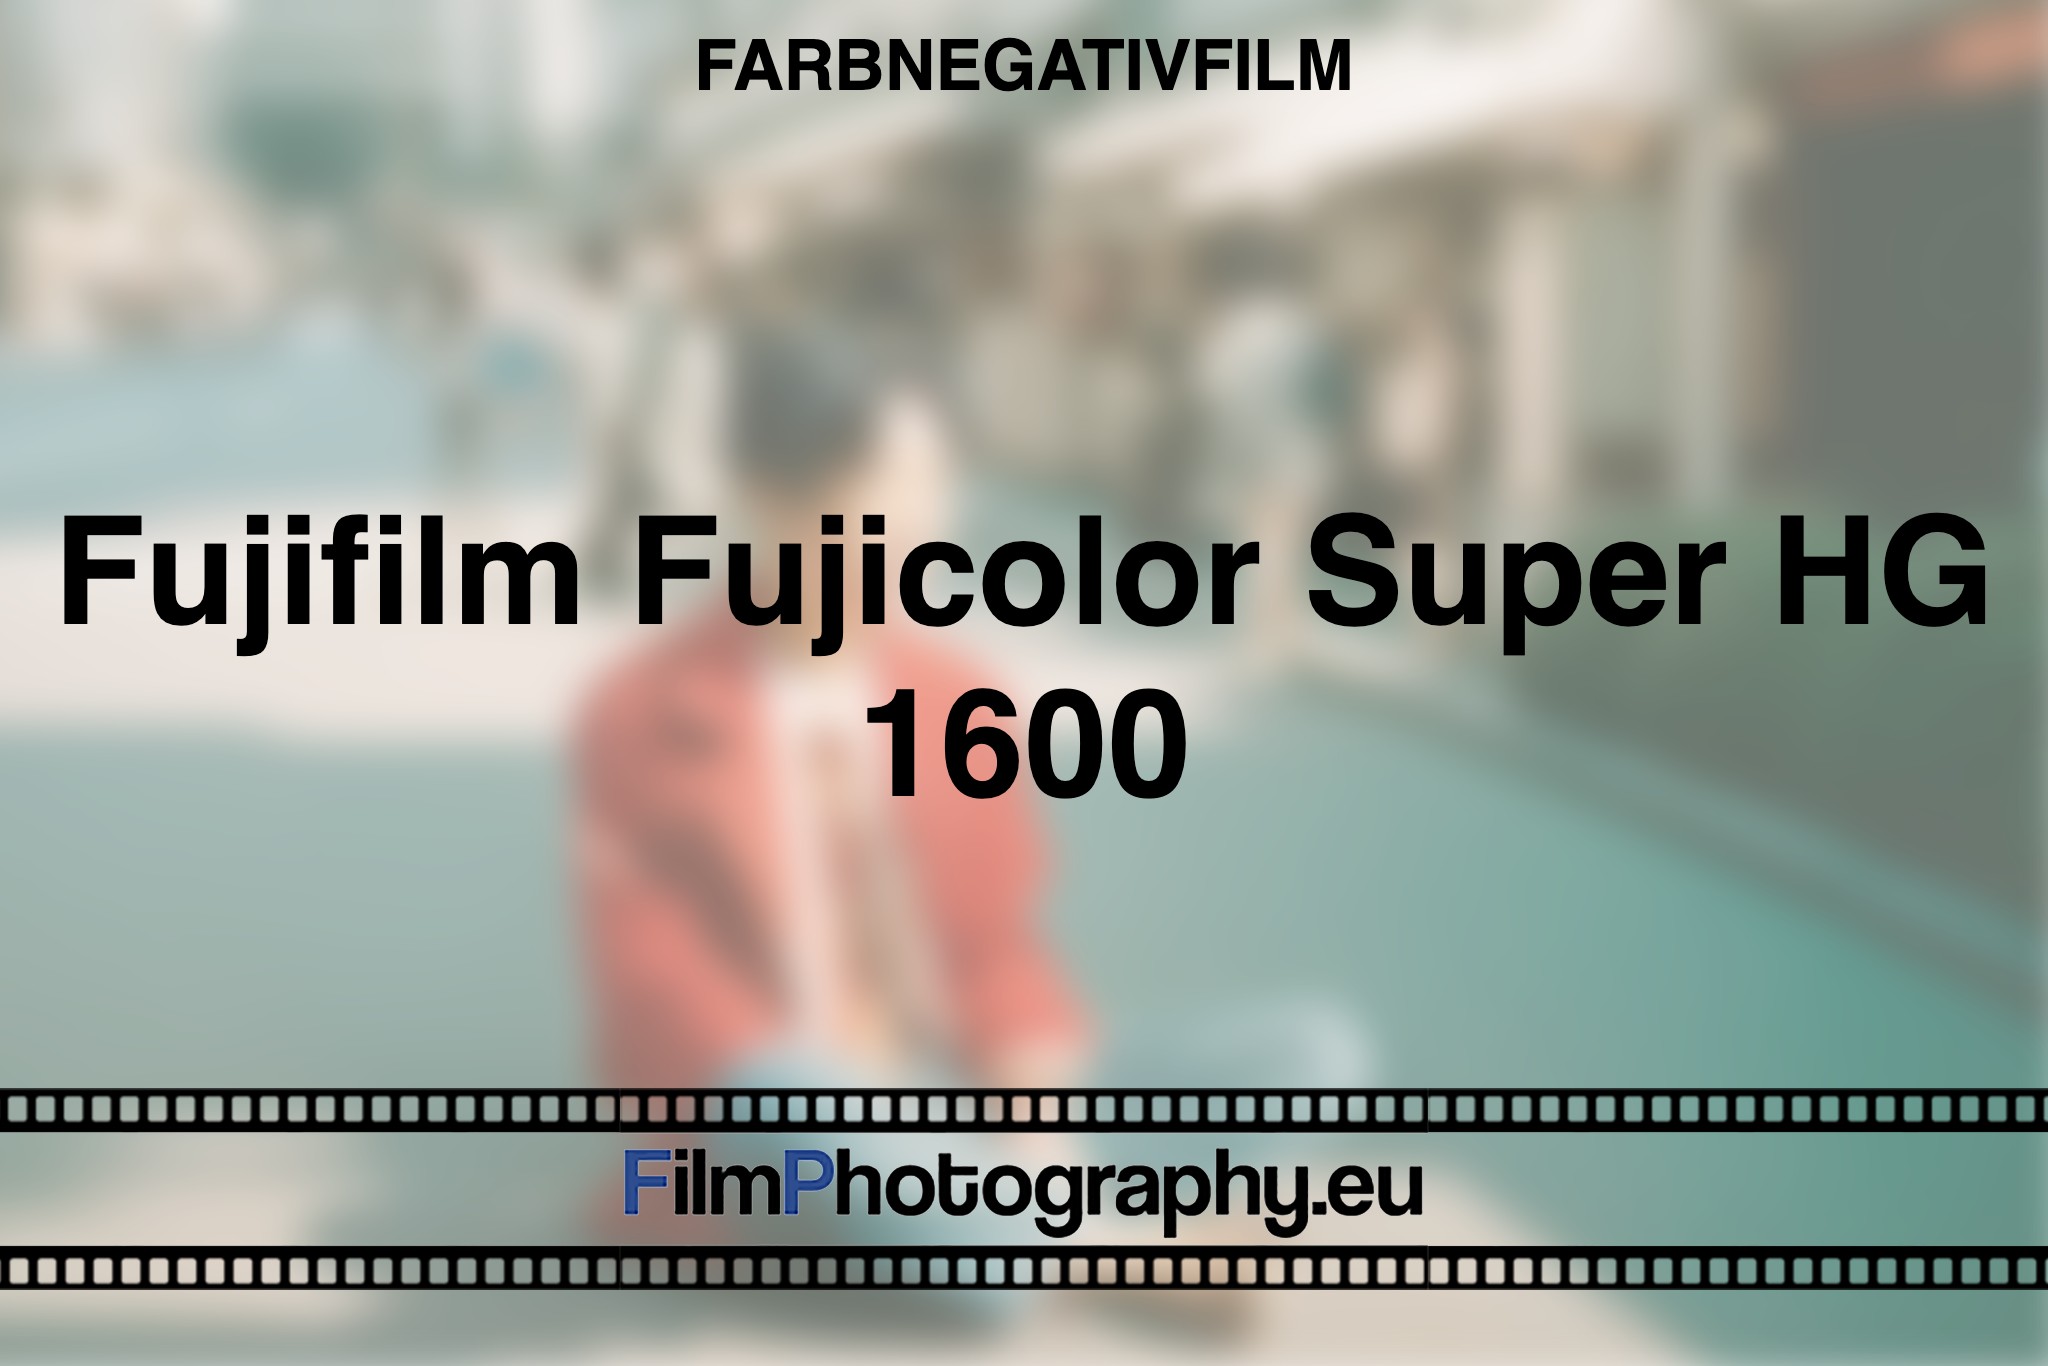 fujifilm-fujicolor-super-hg-1600-farbnegativfilm-bnv